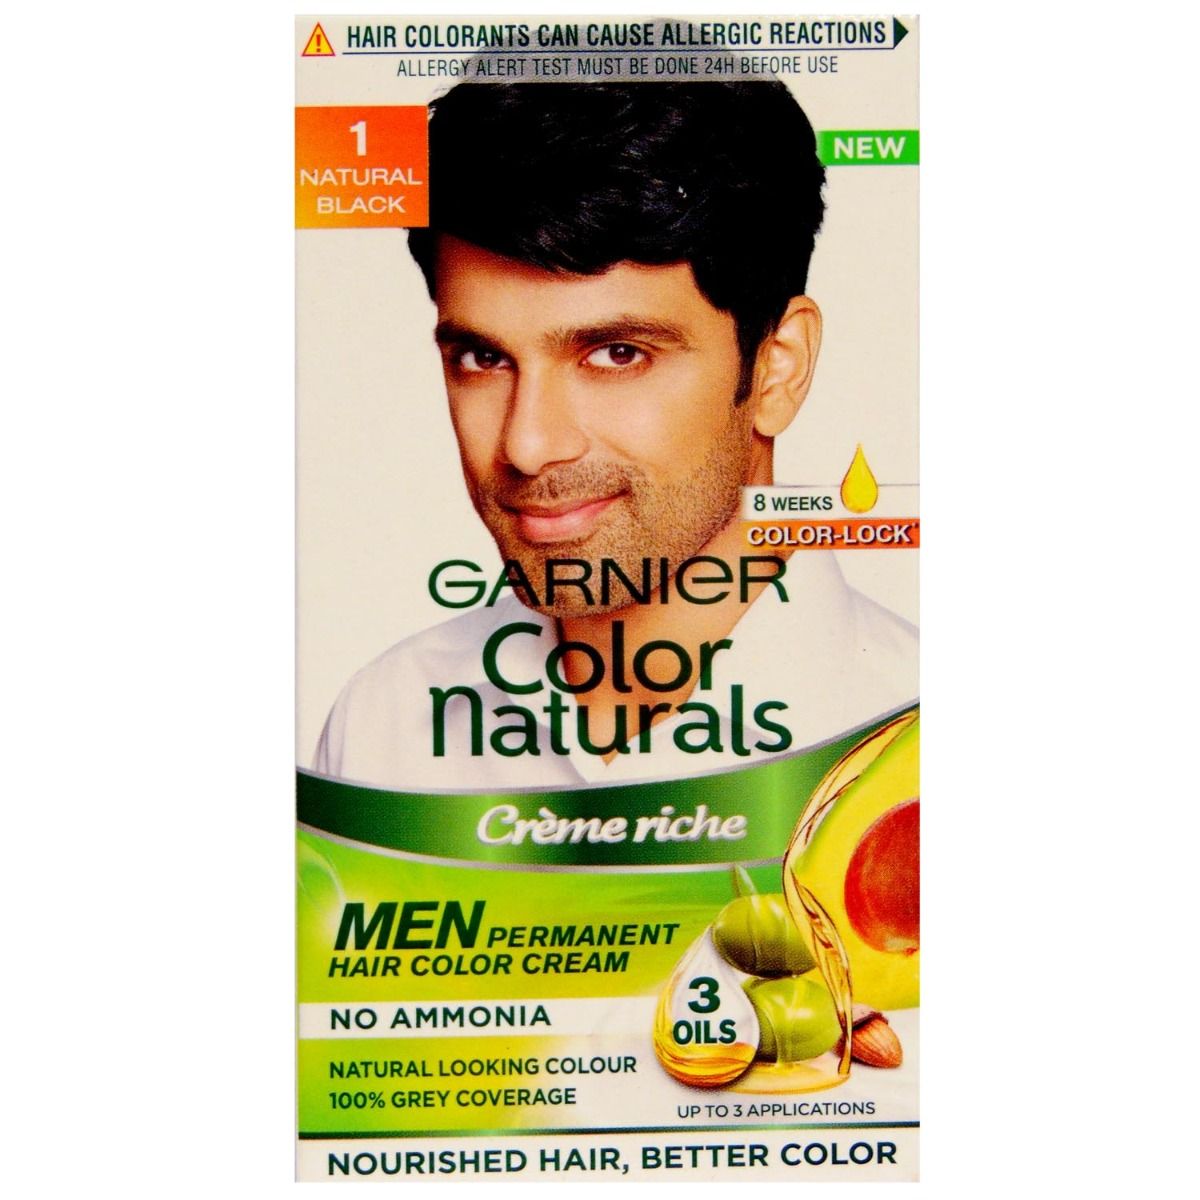 Garnier Color Naturals Men Creme Riche 1 Natural Black, 1 Kit Price, Uses,  Side Effects, Composition - Apollo Pharmacy